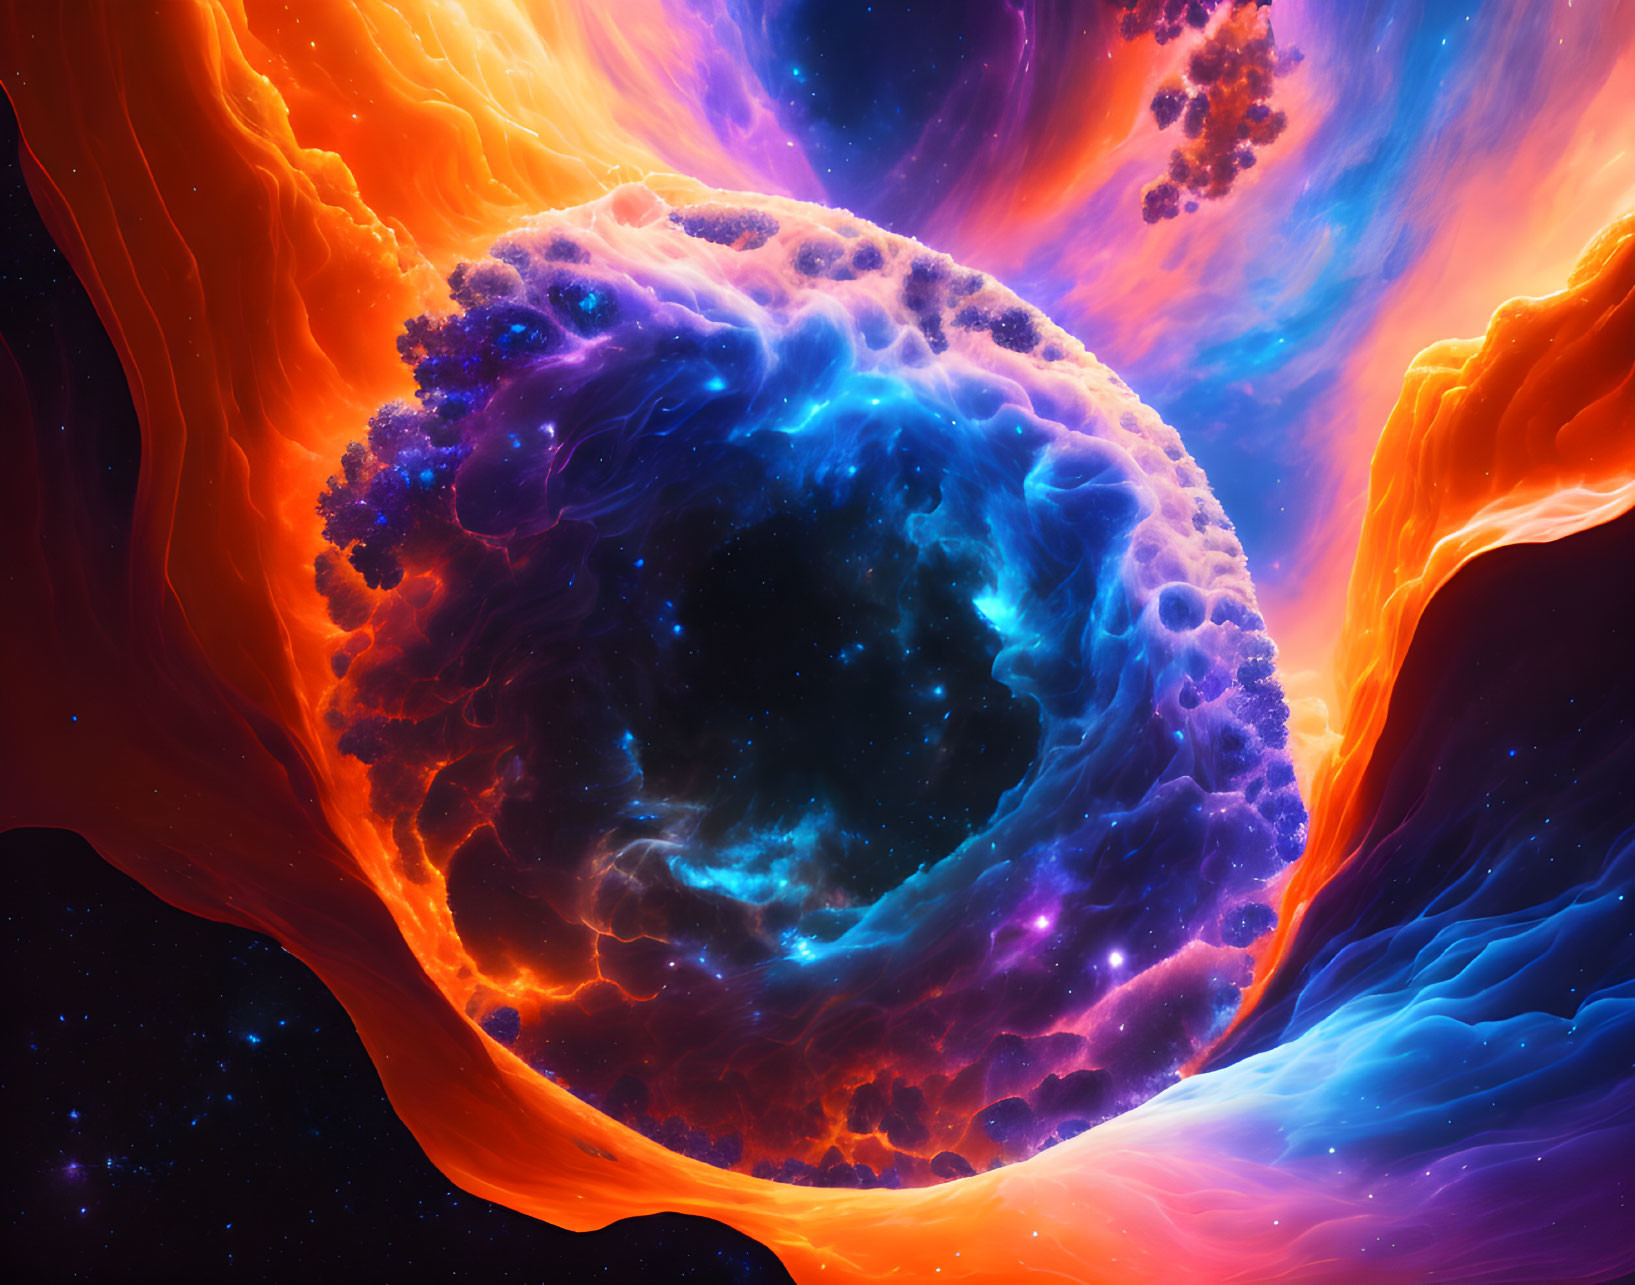 Colorful cosmic illustration: orange and blue nebula swirling around central celestial body